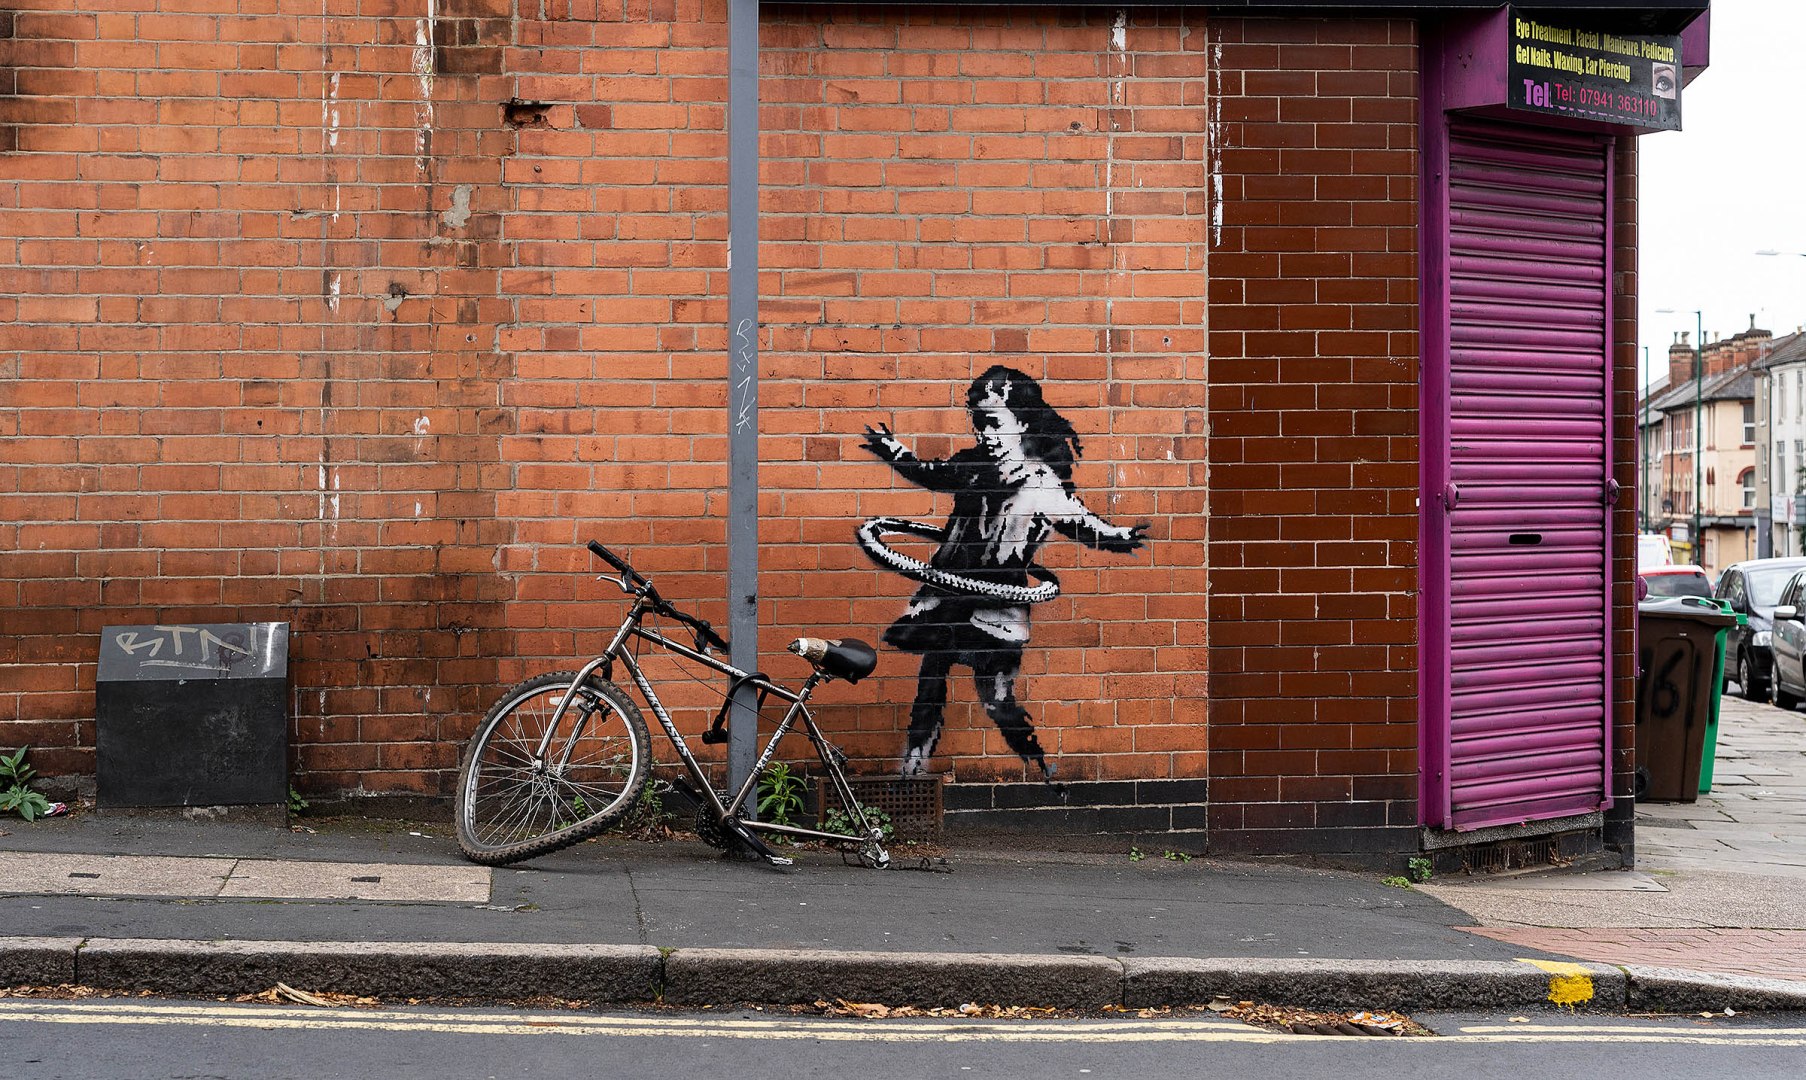 5 Life Lessons Banksy Teaches People Through Graffiti Artworks